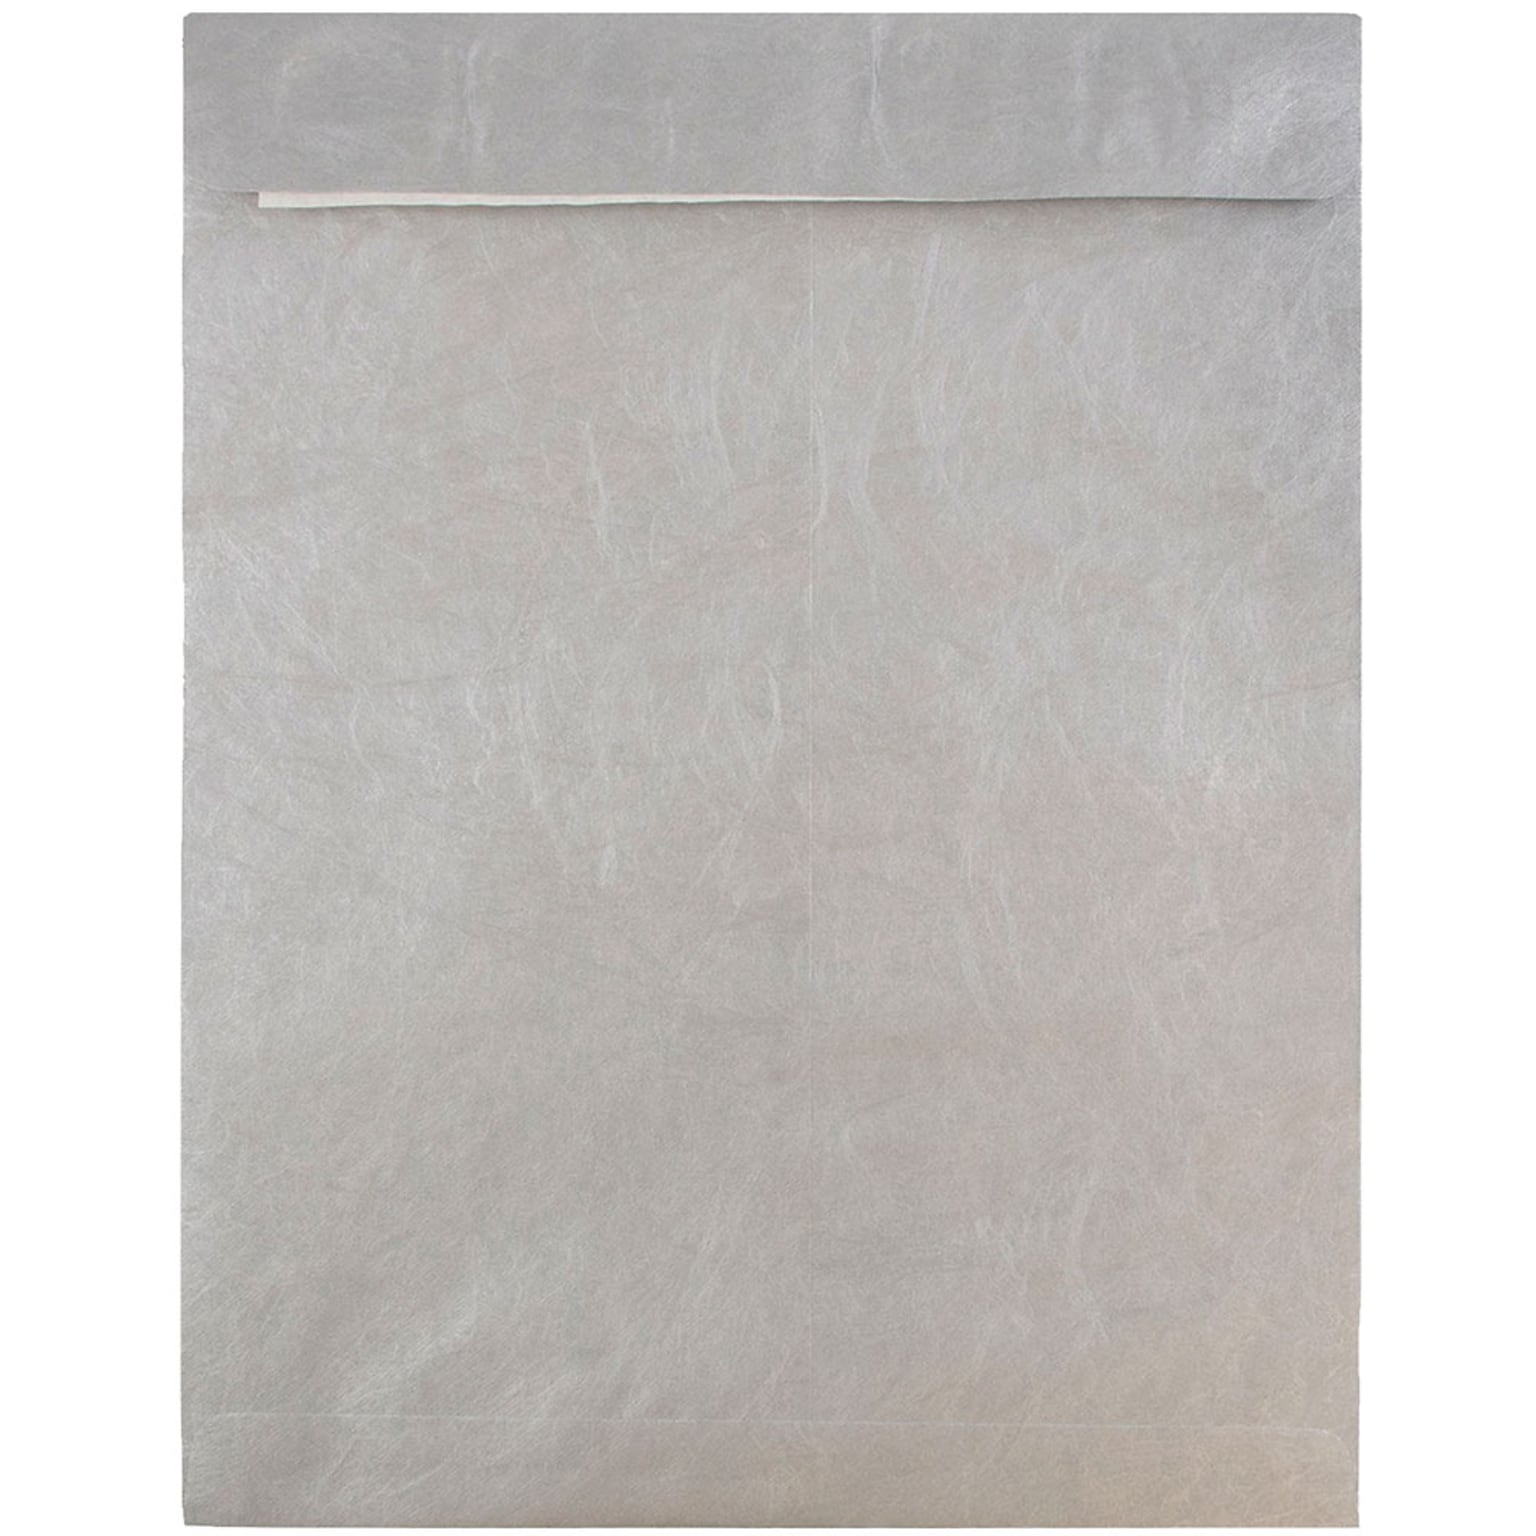 JAM Paper Tyvek Open End #13 Catalog Envelope, with Peel & Seal Closure 10 x 13, Silver, 25/Pack (V021384)